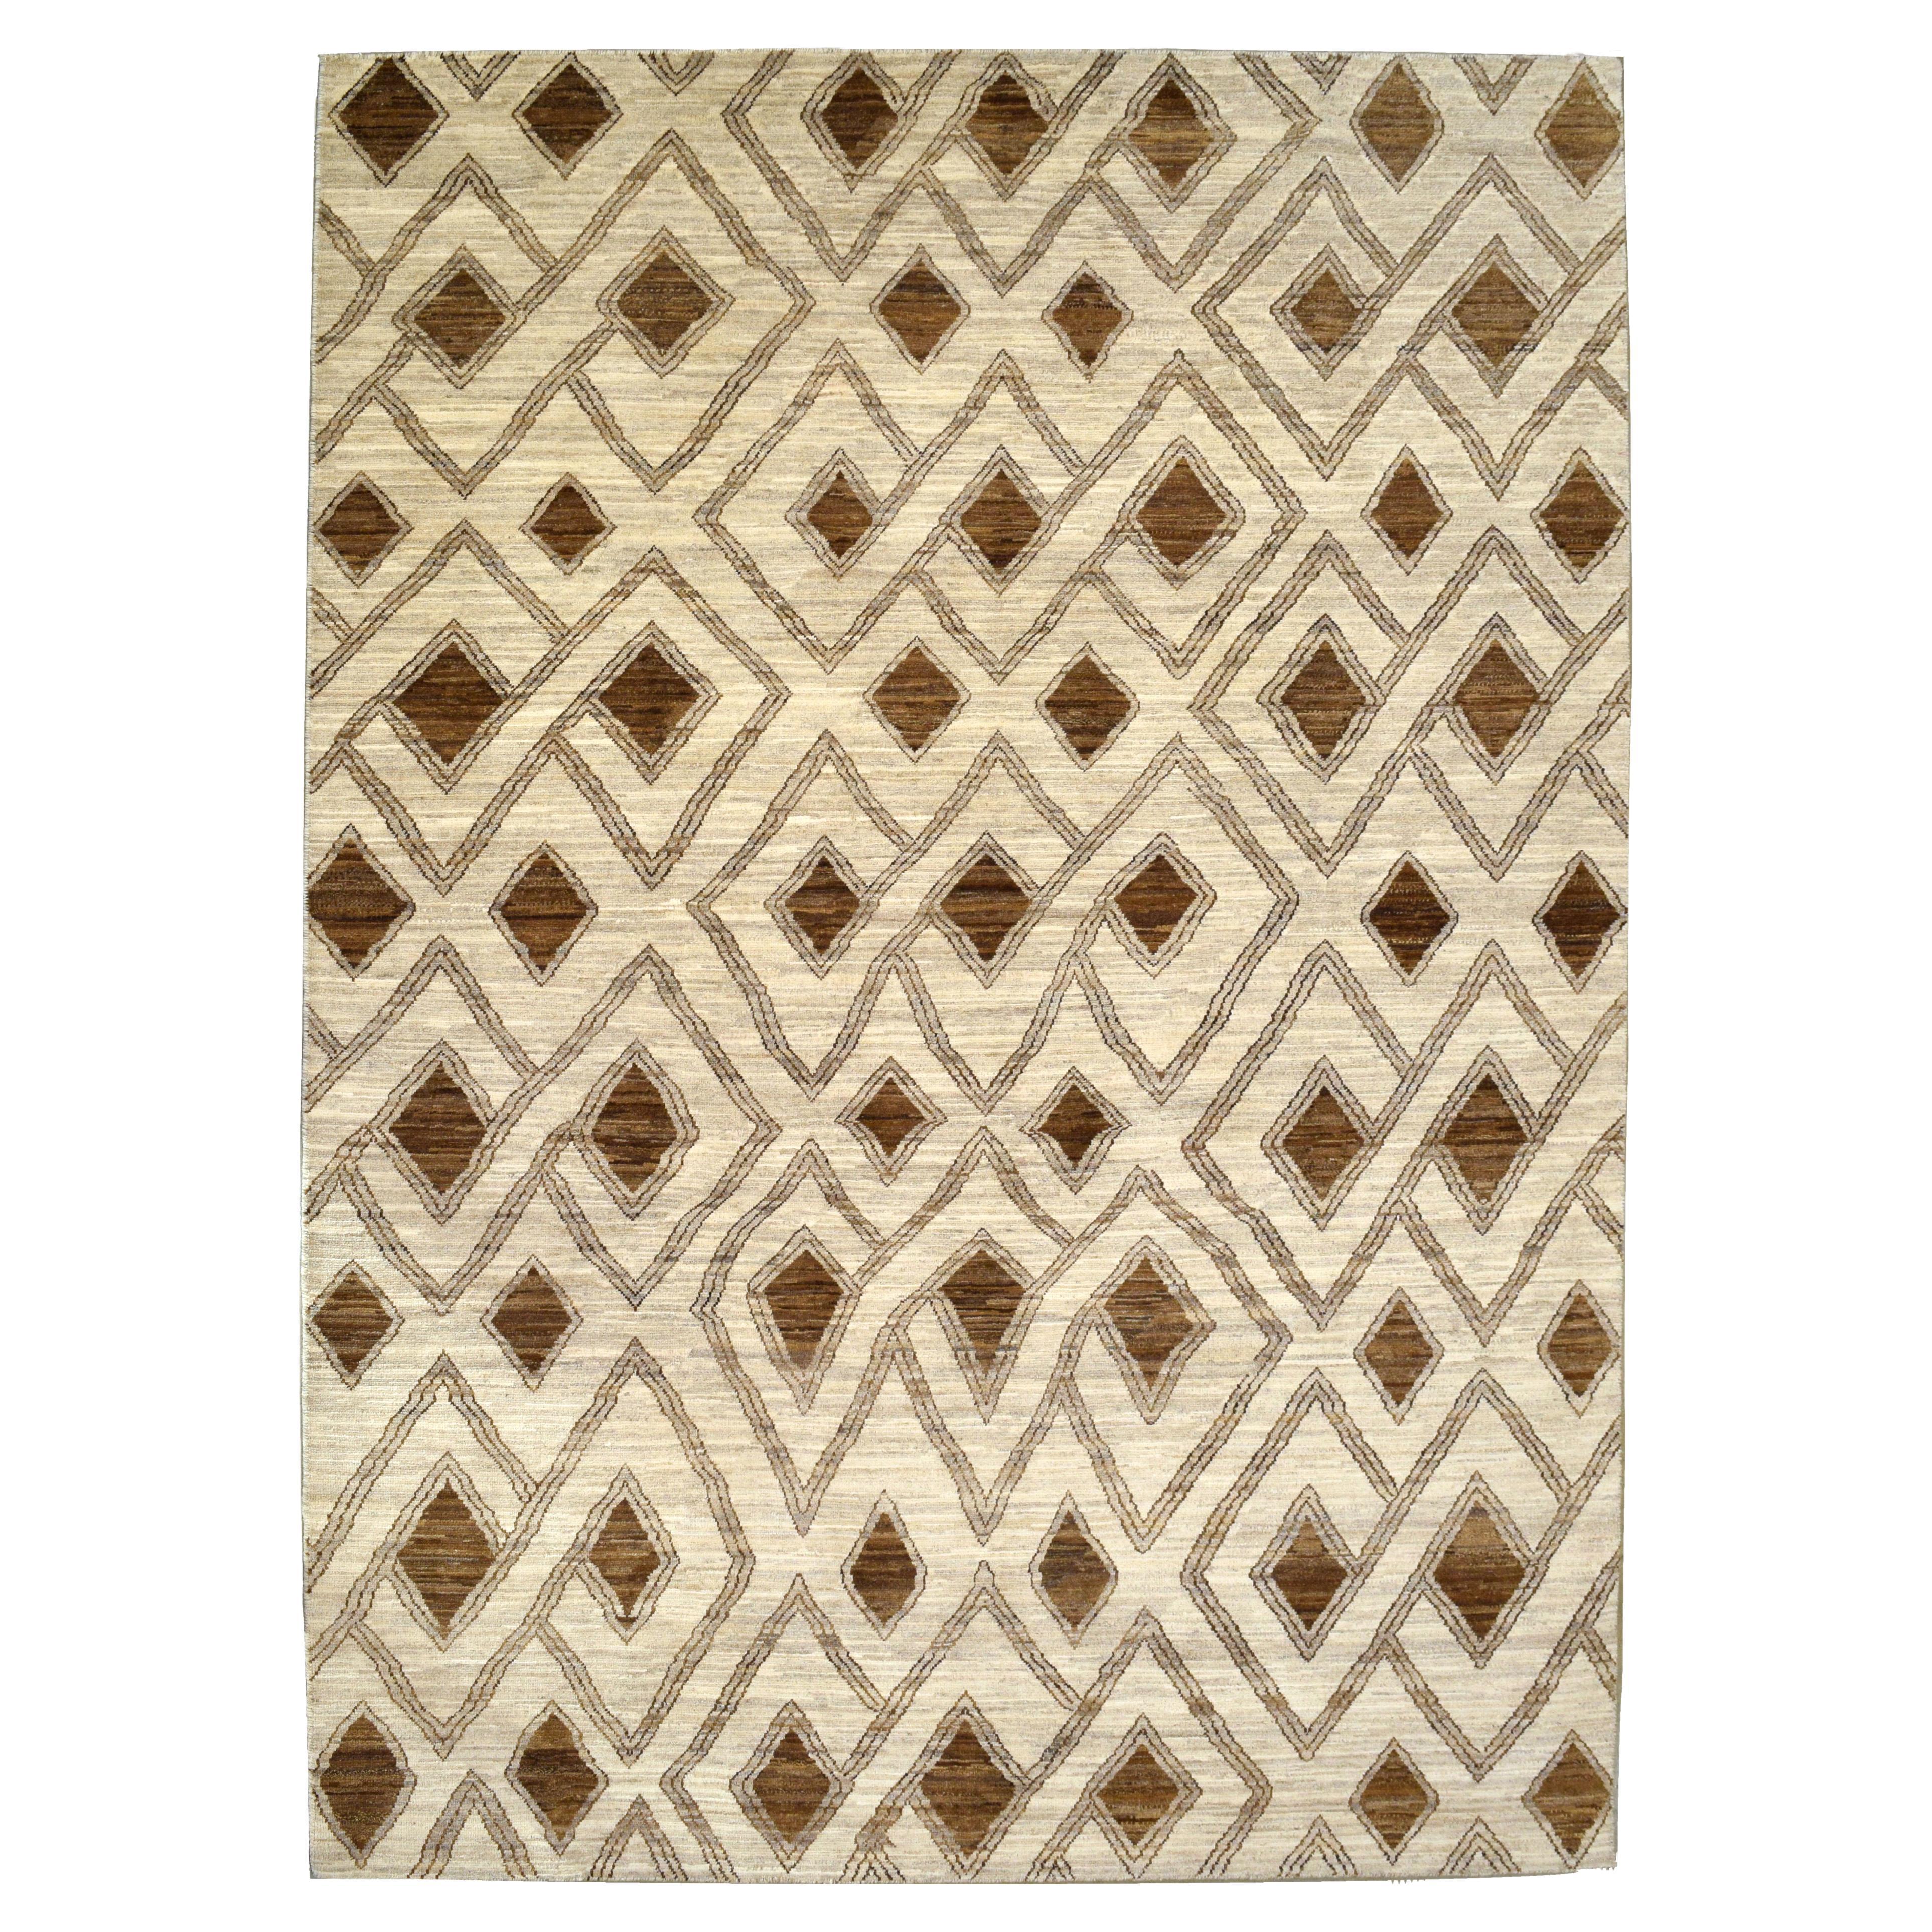 Geometric Neutral Wool Carpet in Brown and Cream, 6' x 9'